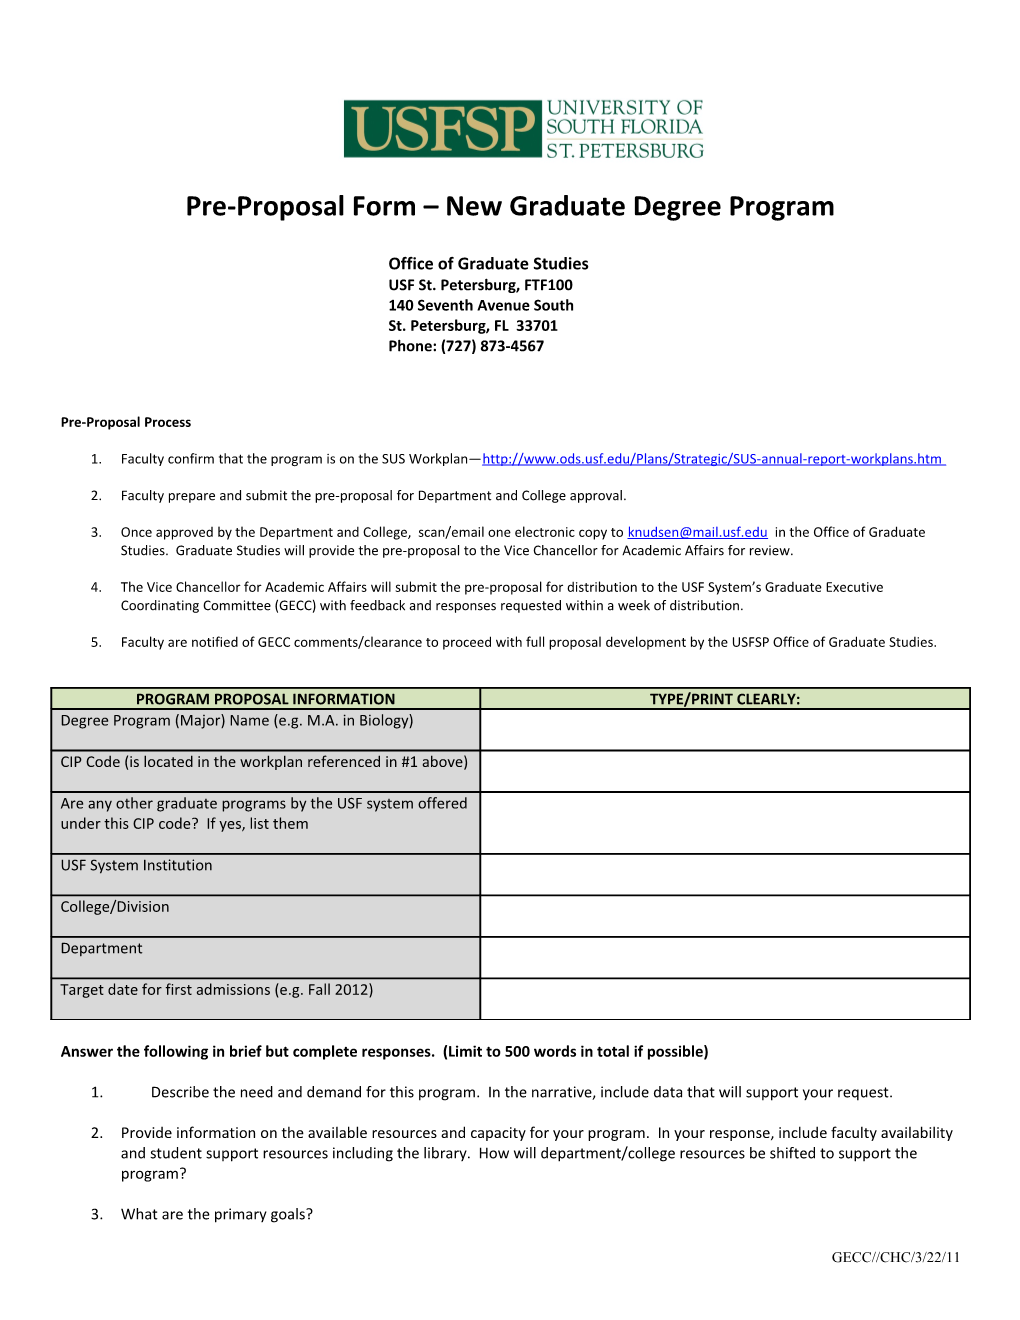 Pre-Proposal Form New Graduate Degree Program